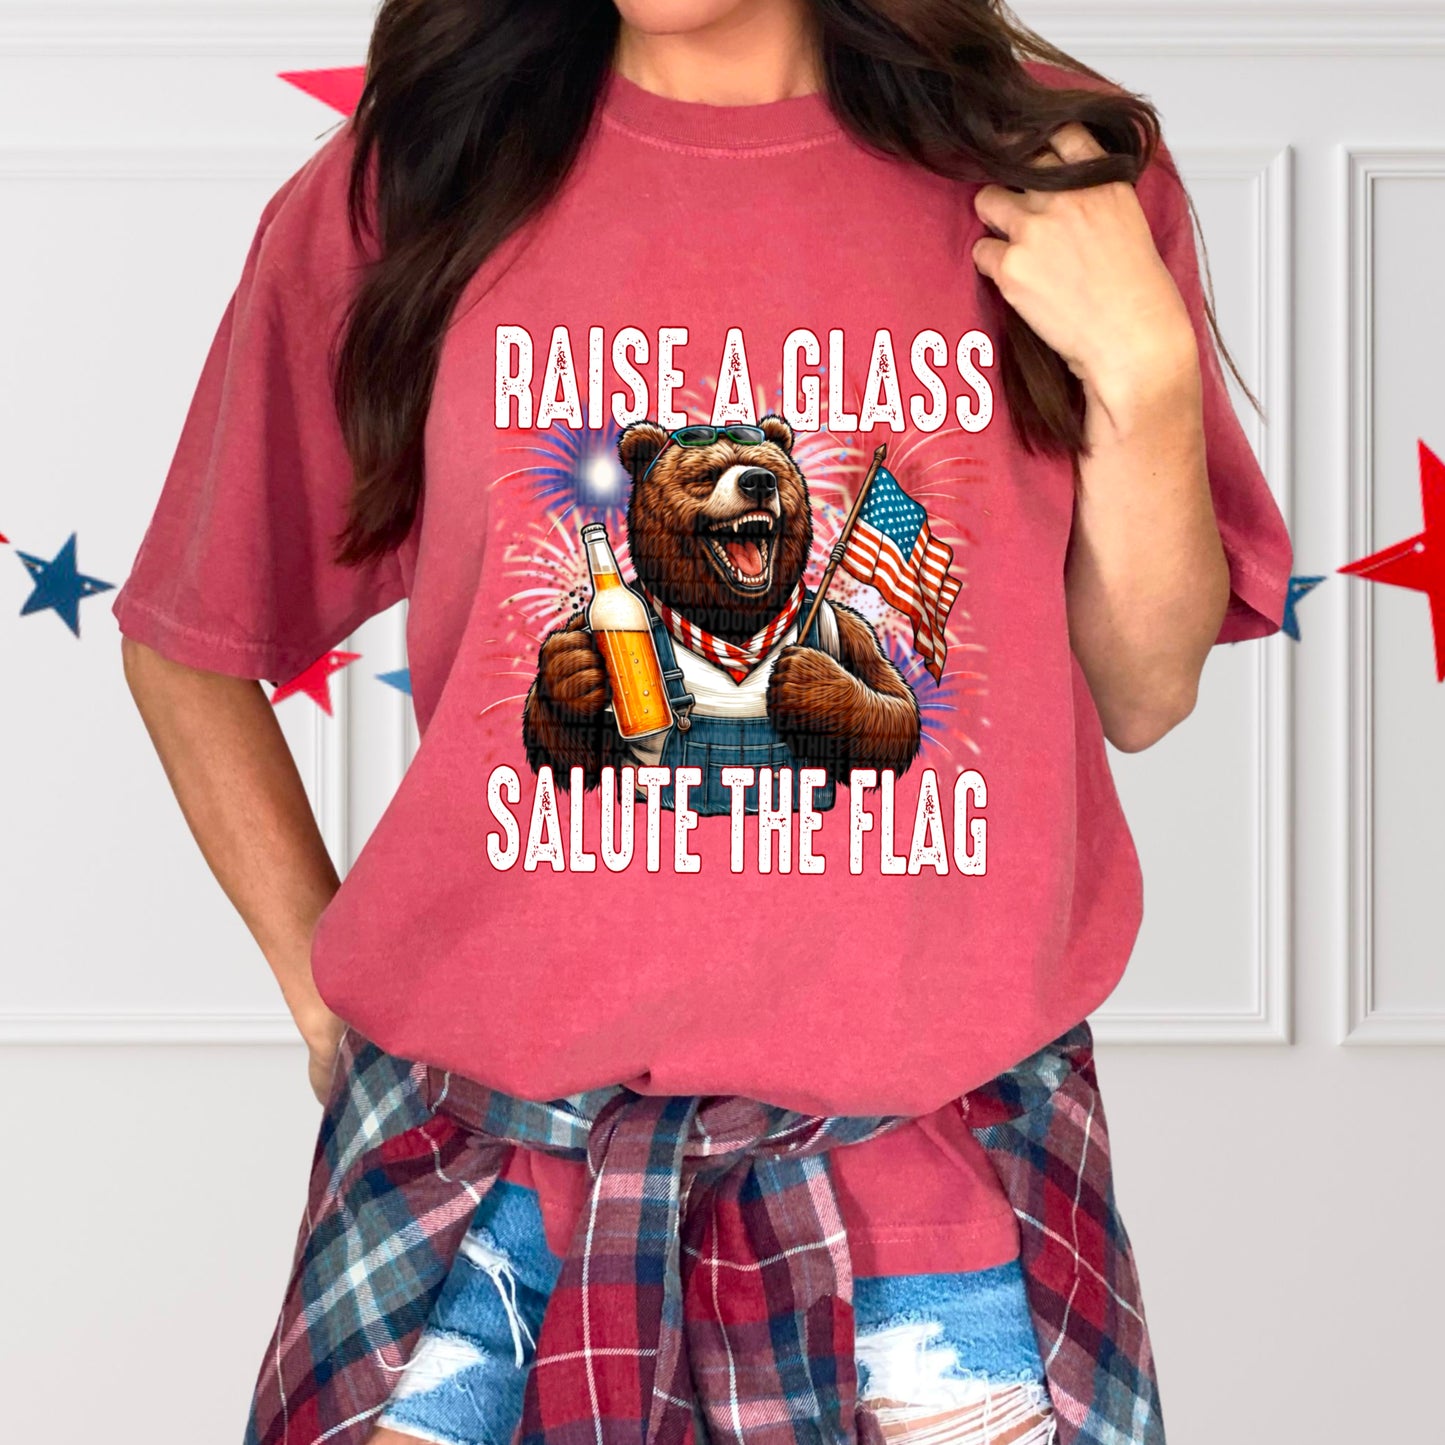 Raise A Glass, Salute The Flag